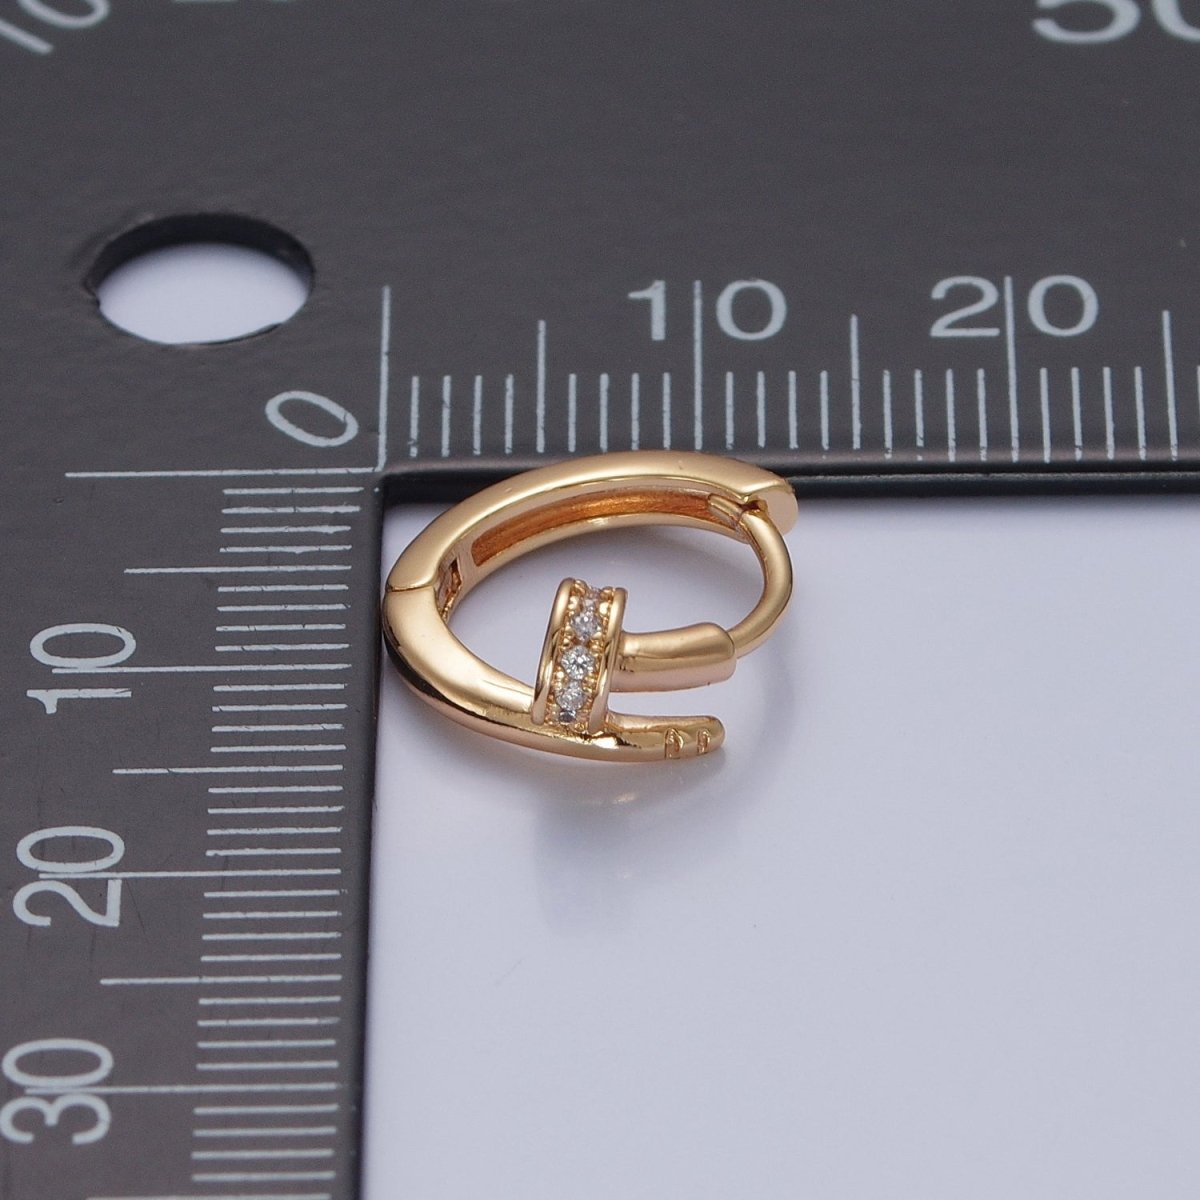 Gold Filled Spiral Nail Earring Lever Back Huggie Earring V-434 - DLUXCA